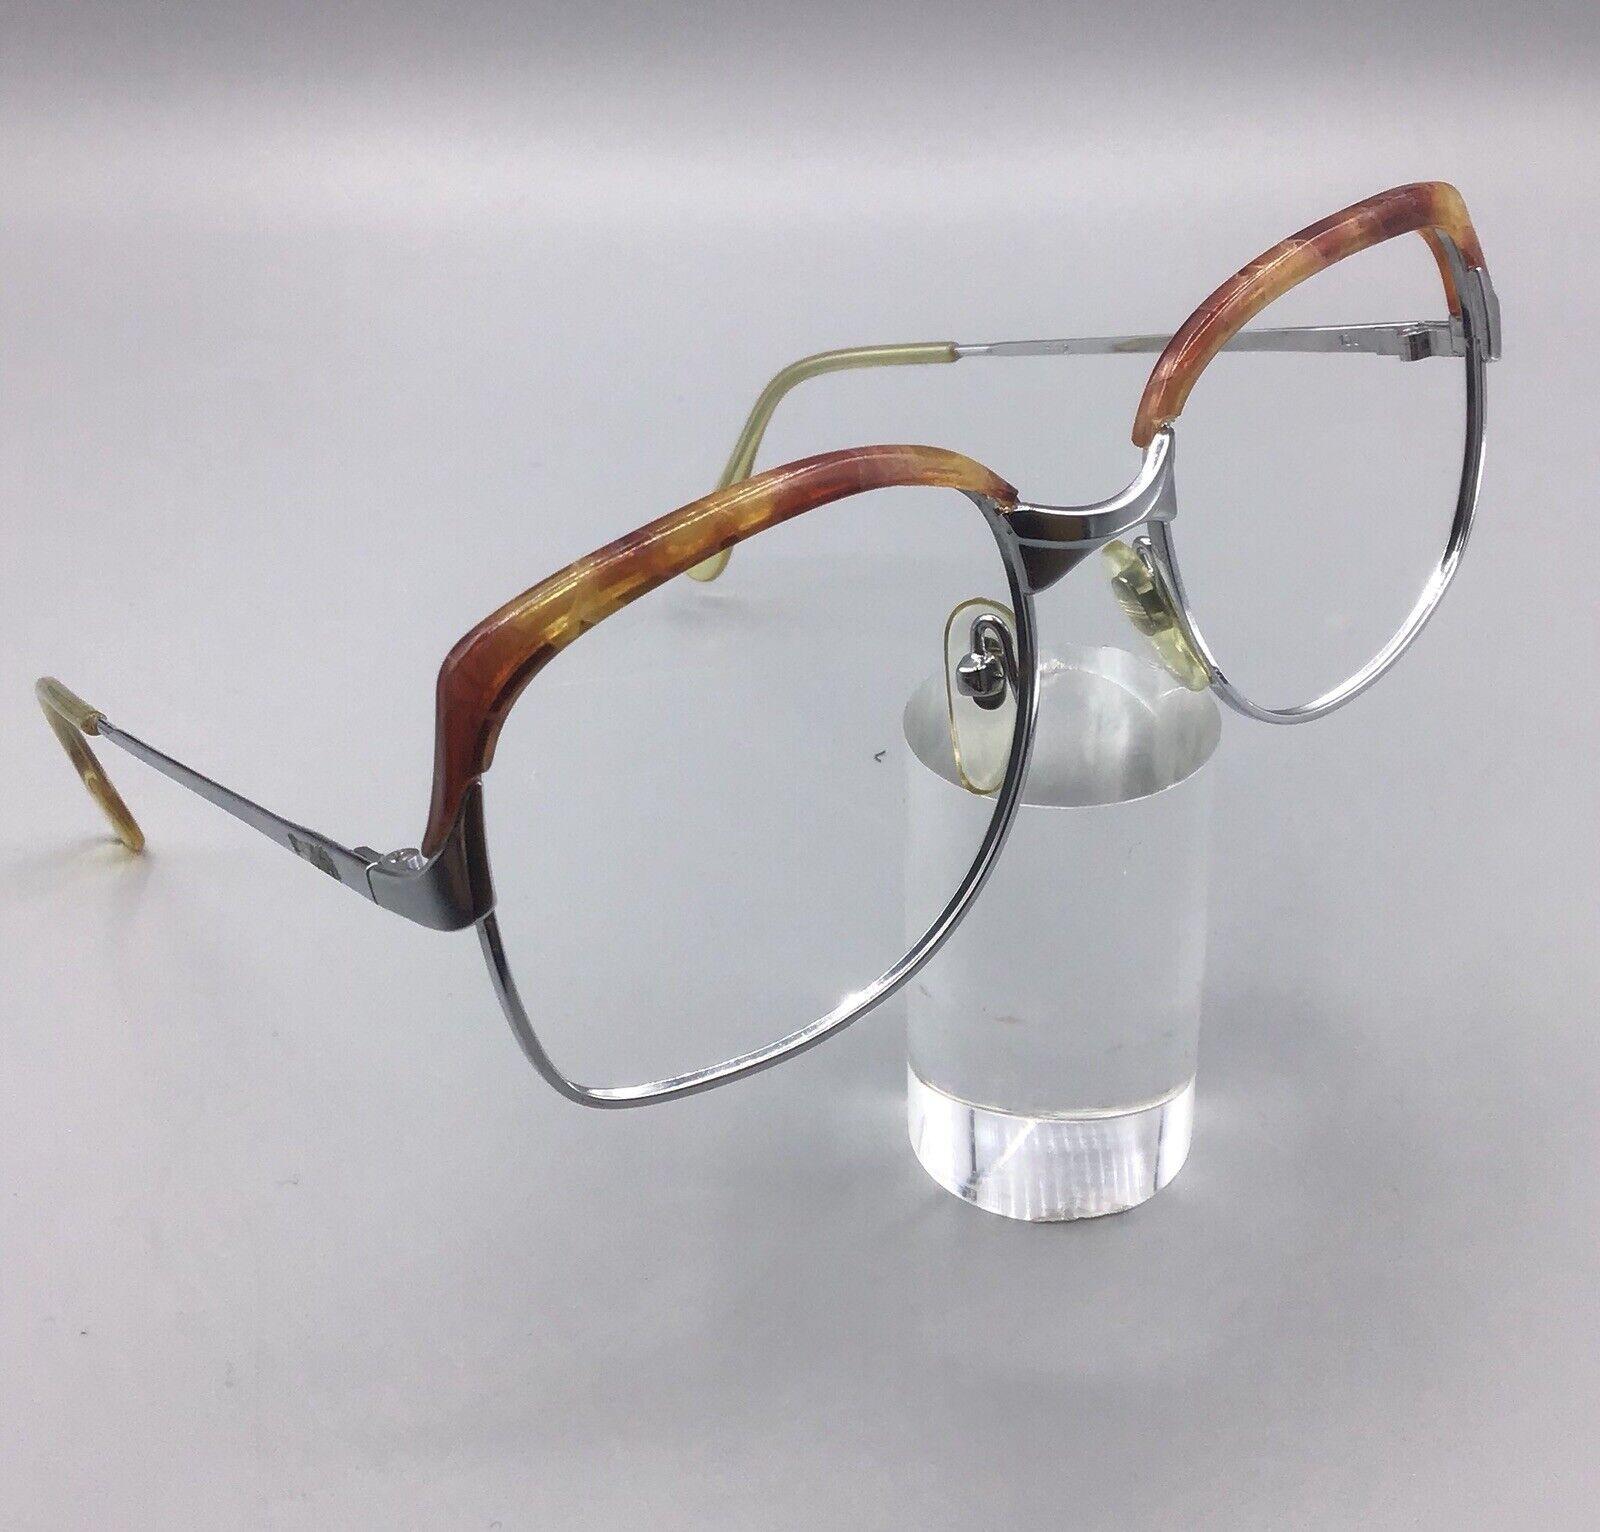 Marcolin occhiale vintage Eyewear frame Italy Brillen lunettes model 832